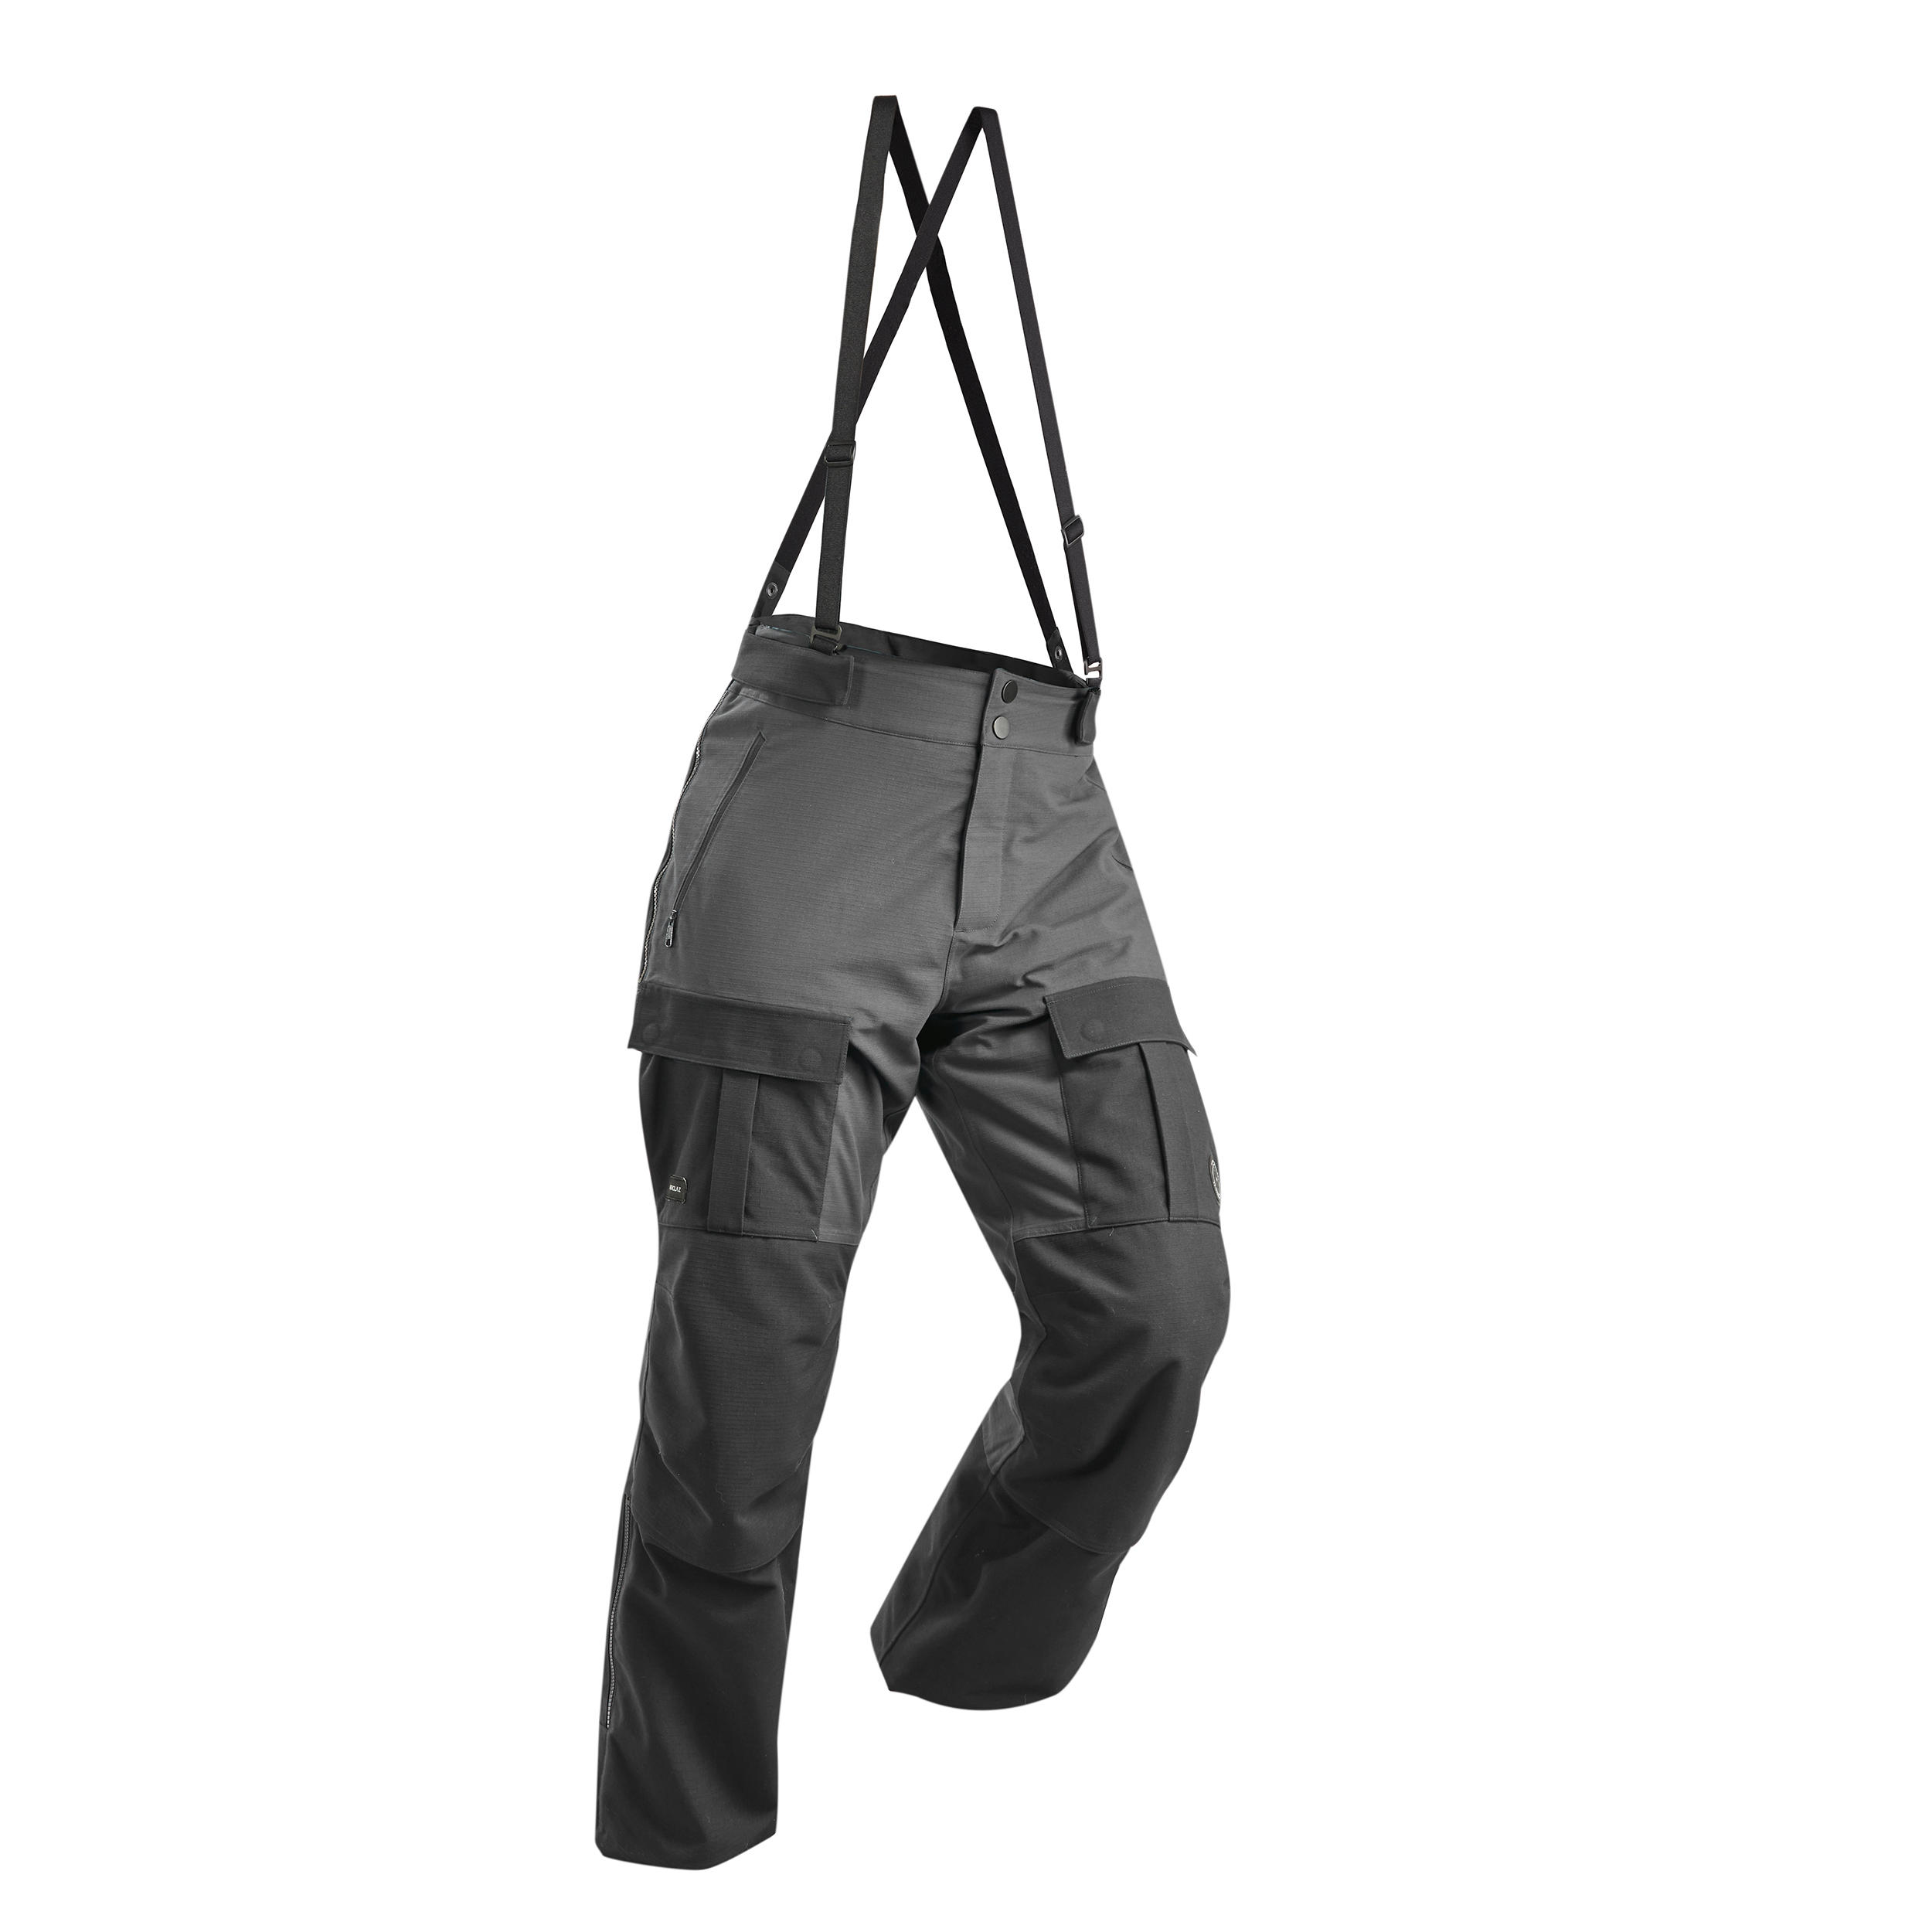 Pantalon Călduros Impermeabil Trekking ARCTIC 900 Negru Adulți FORCLAZ 900